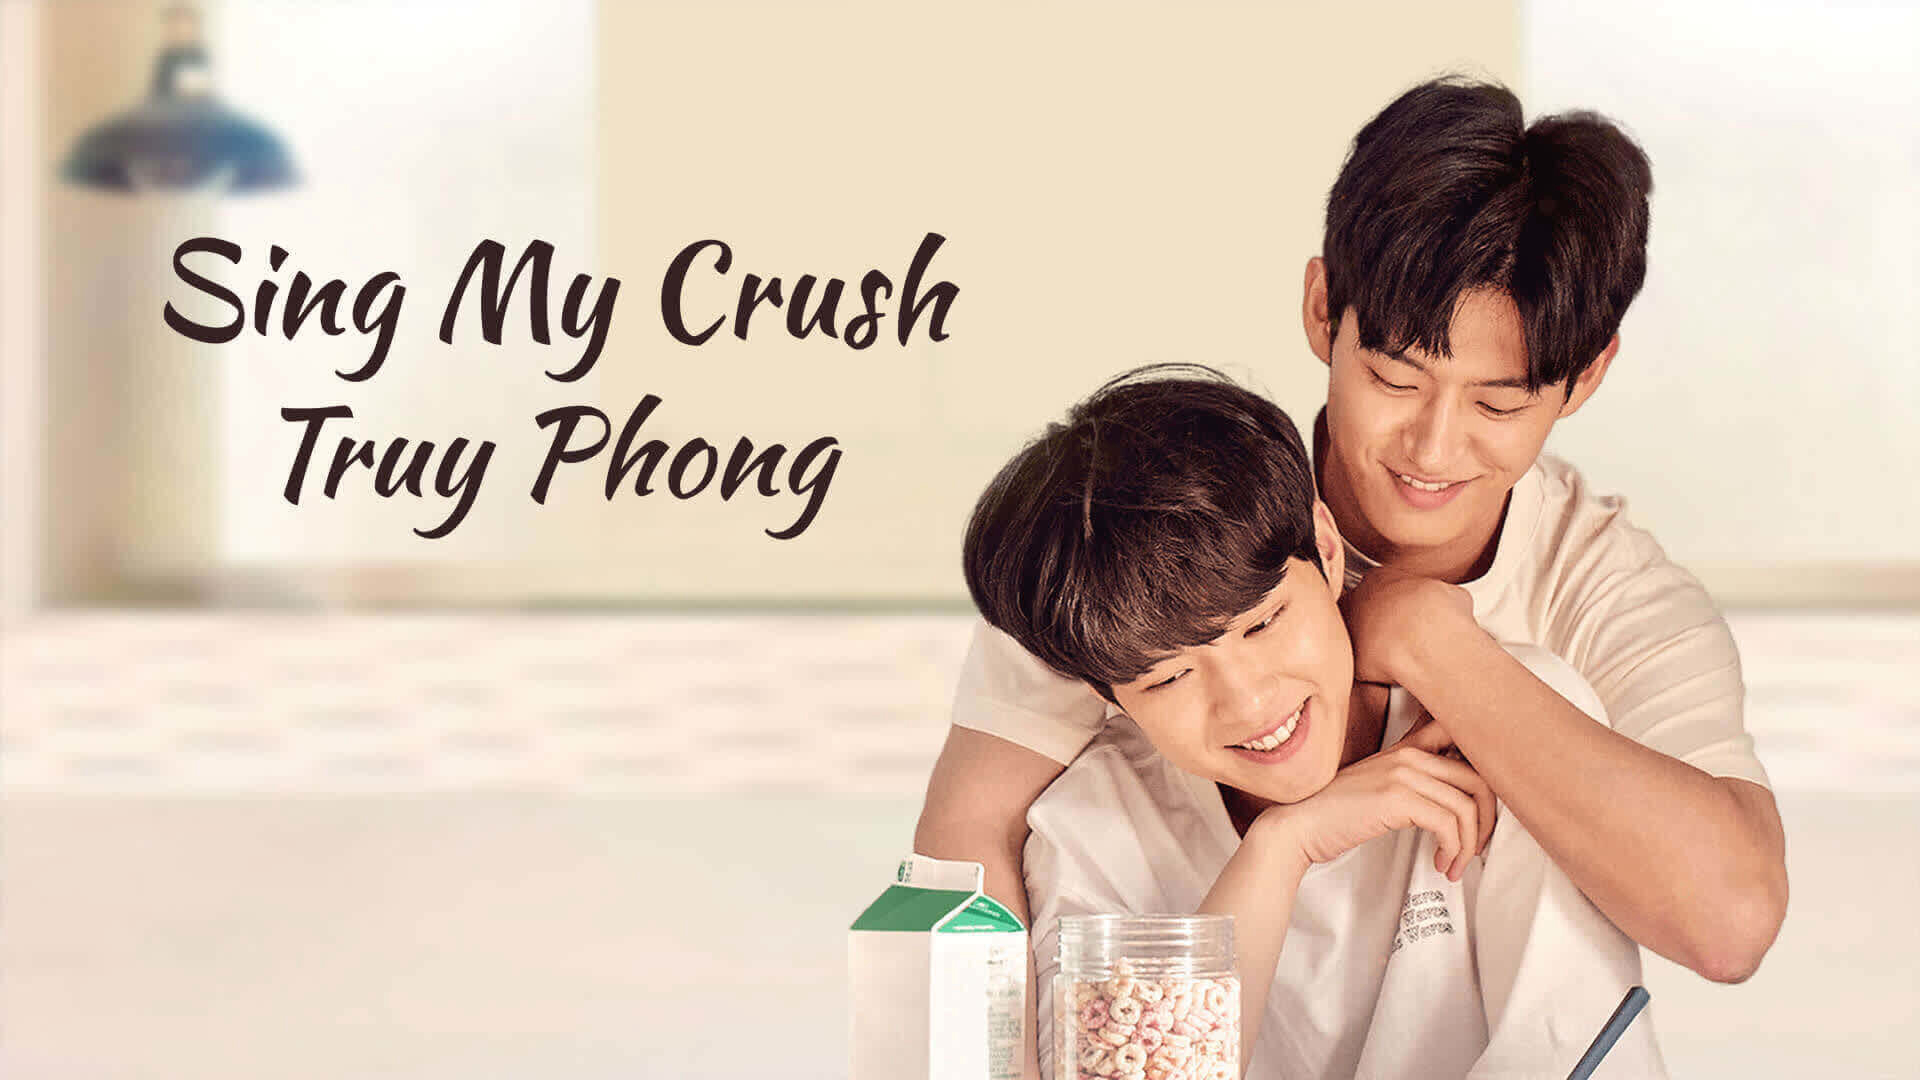 Xem Phim Sing My Crush: Truy Phong (Sing My Crush)